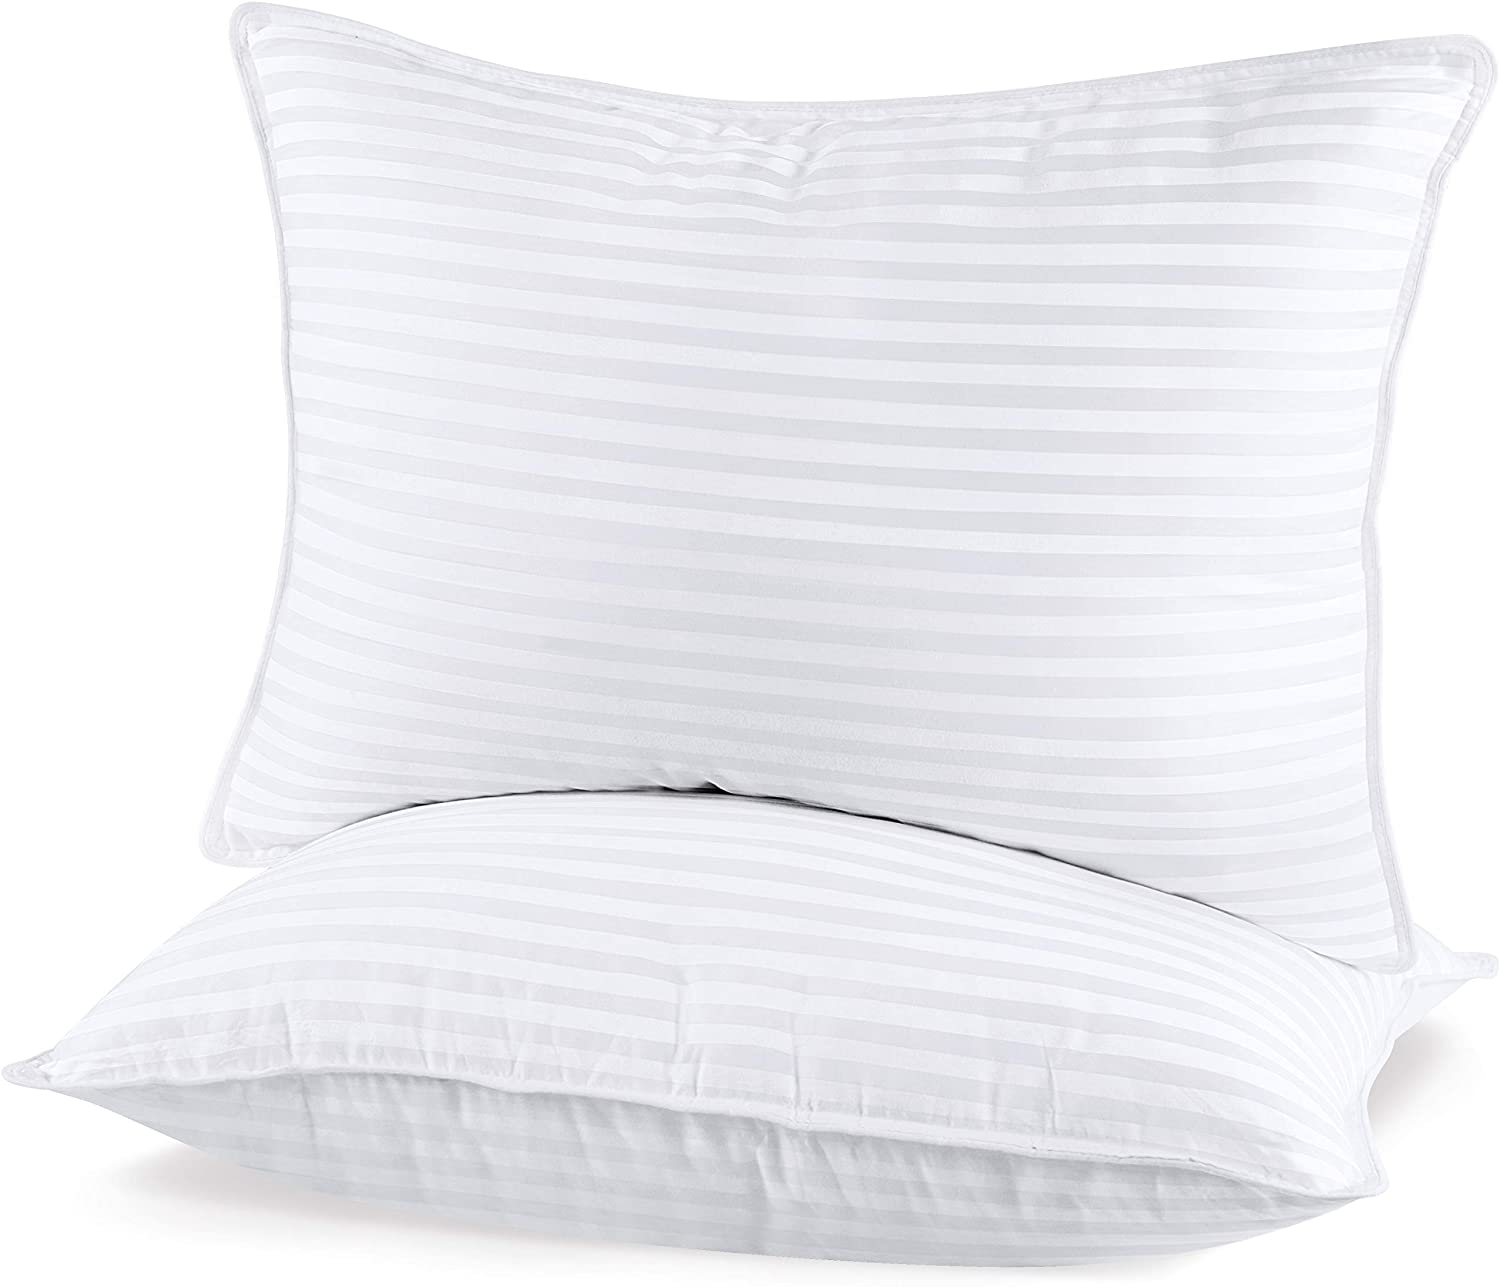 Details about   Utopia Bedding Premium Plush Gel Pillow 2 Pack Qu Fiber Filled Bed Pillows 